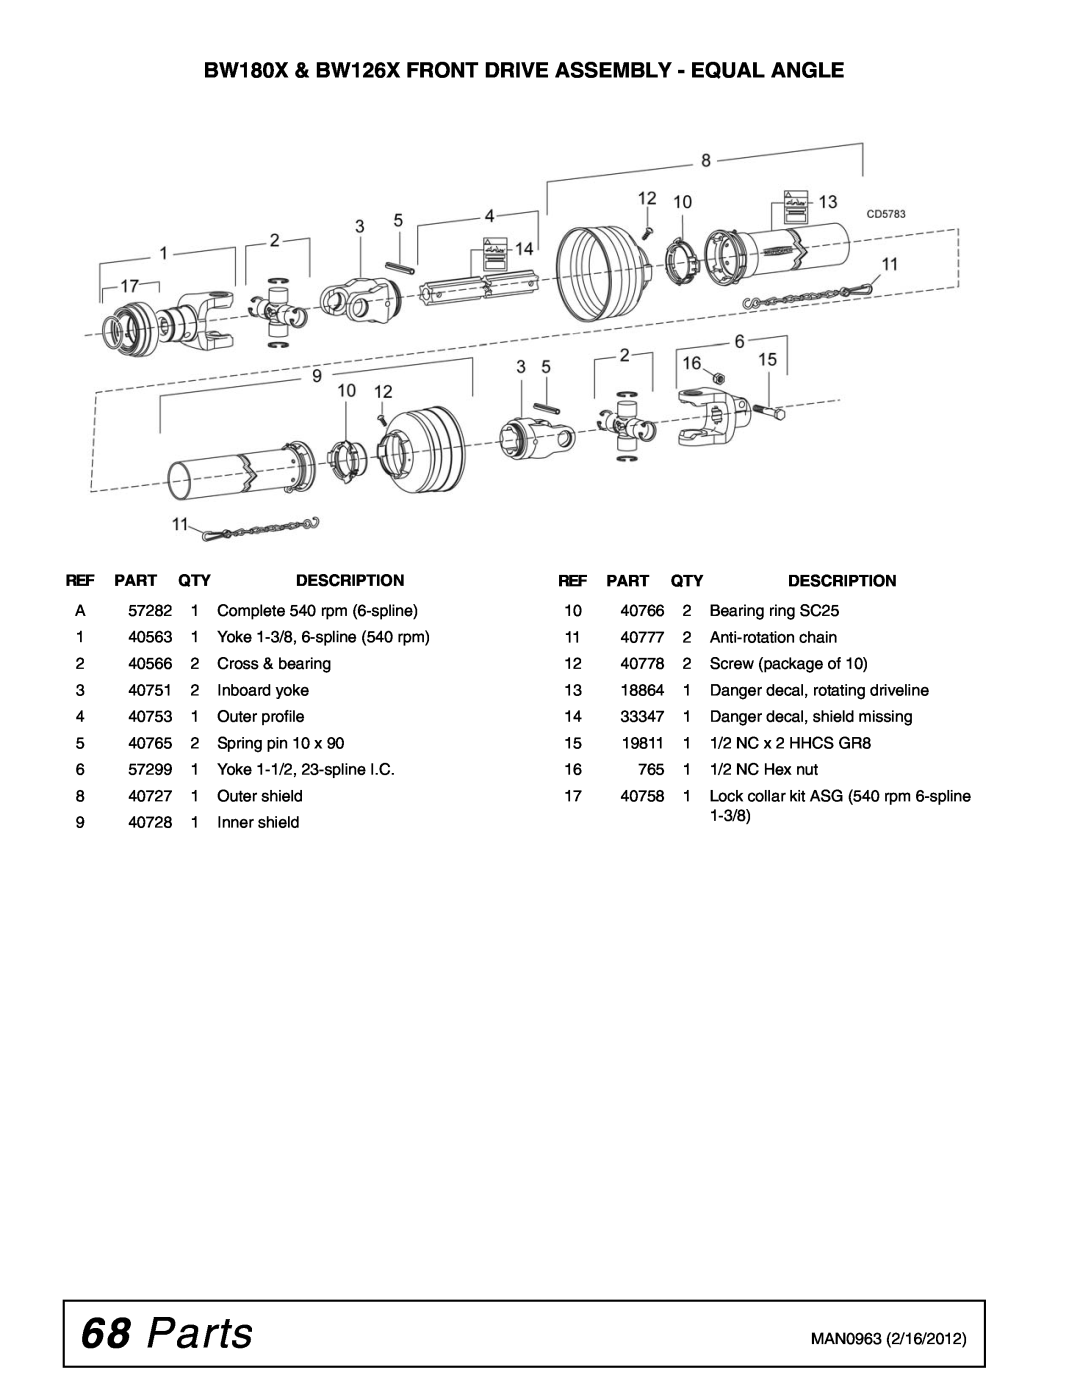 Woods Equipment BW180XHDQ, BW126XHDQ manual Parts, Description 